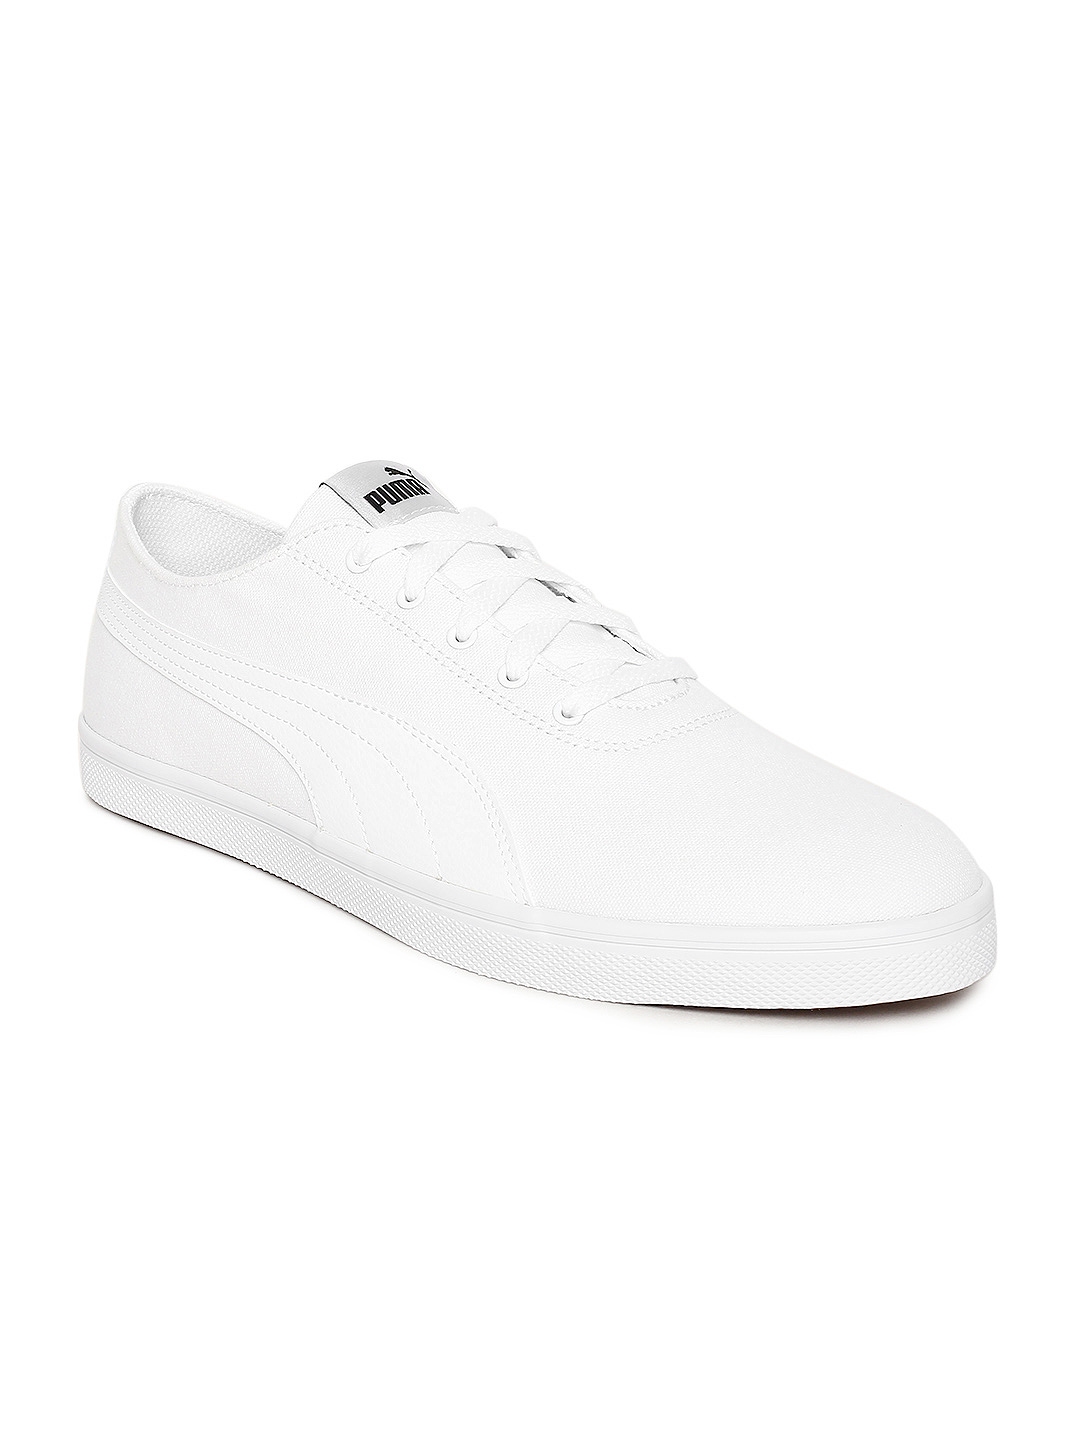 Buy Puma Men White Urban Sneakers - Casual Shoes for Men 2429557 | Myntra